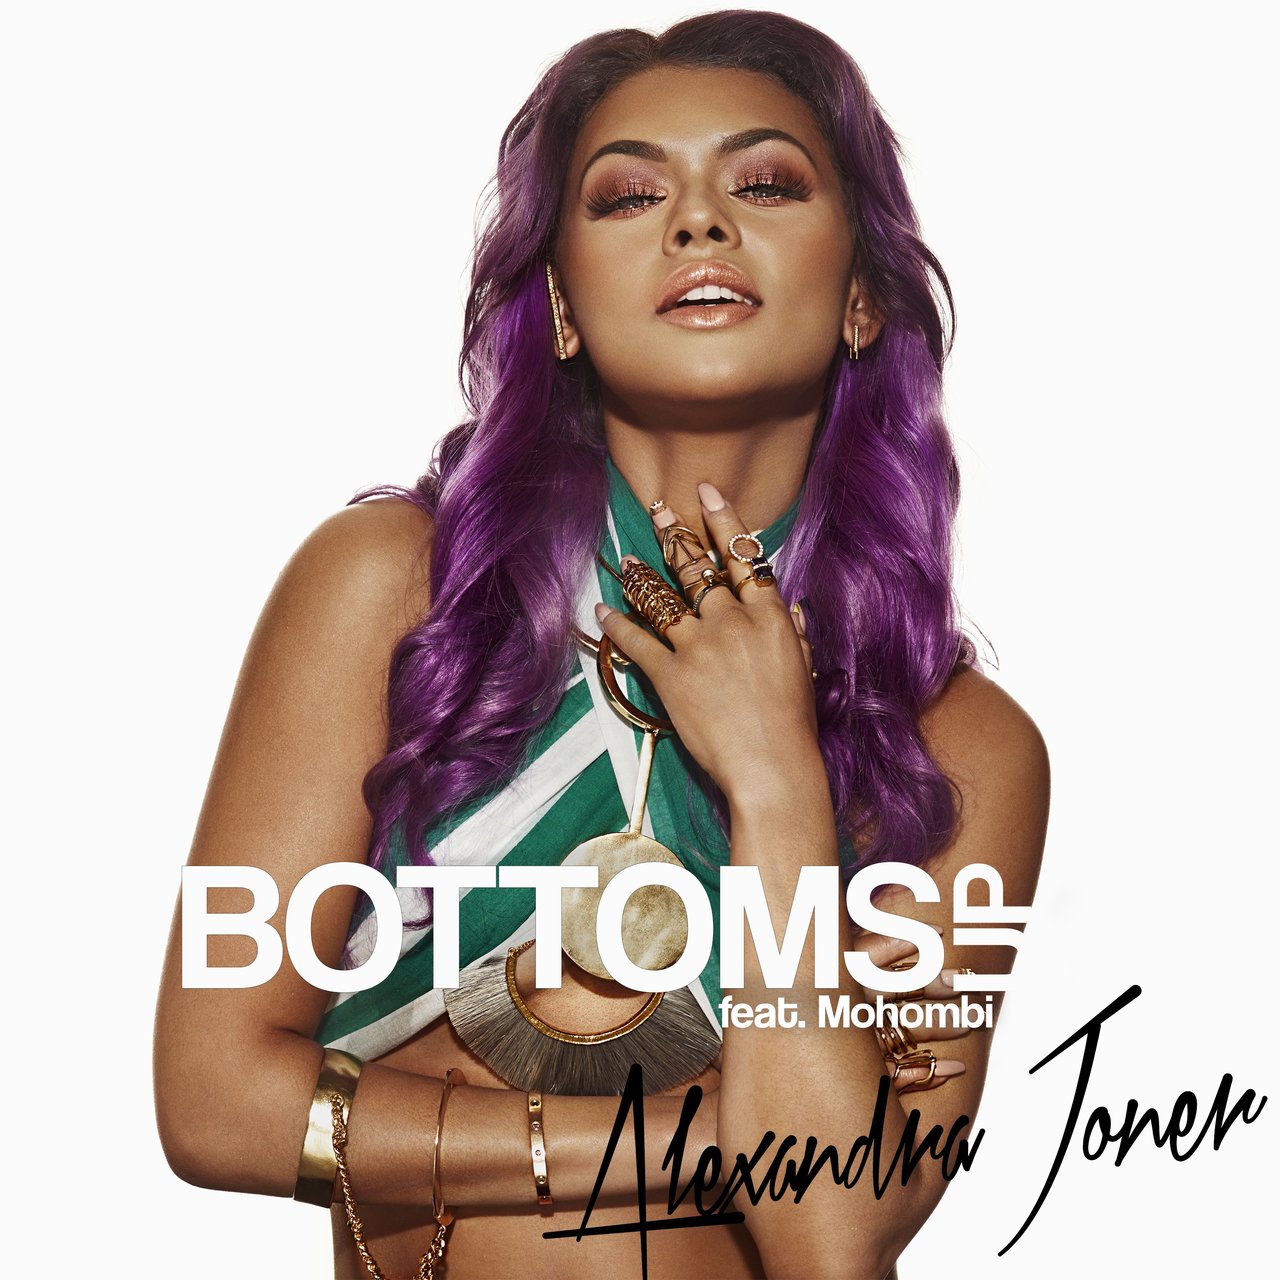 Alexandra Joner ft. featuring Mohombi Bottoms Up cover artwork